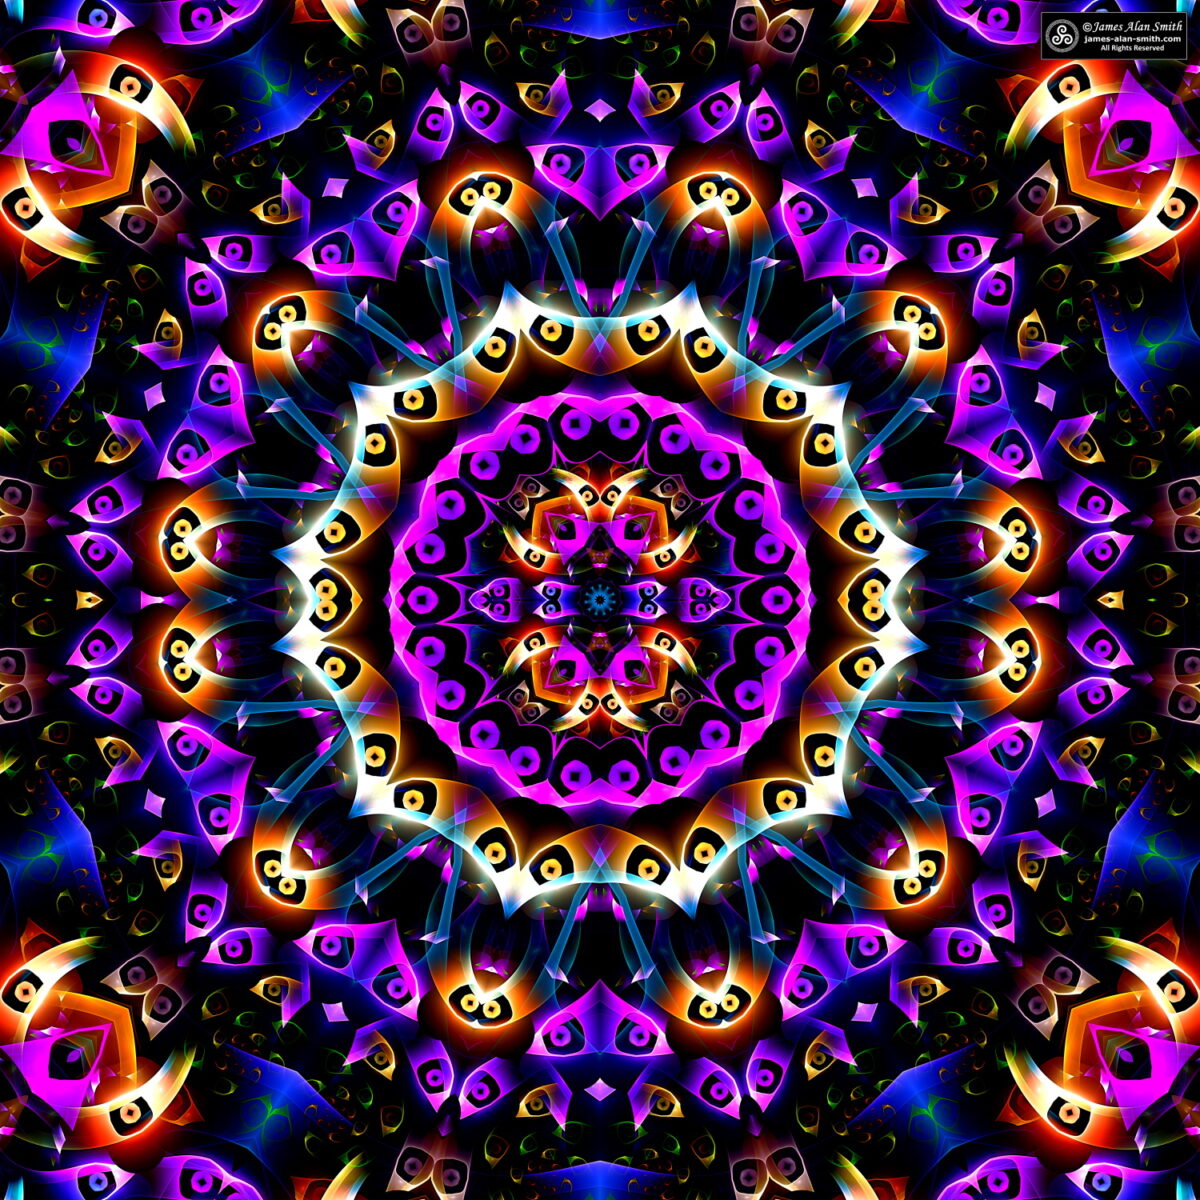 NeonGlow Mandala: Artwork by James Alan Smith